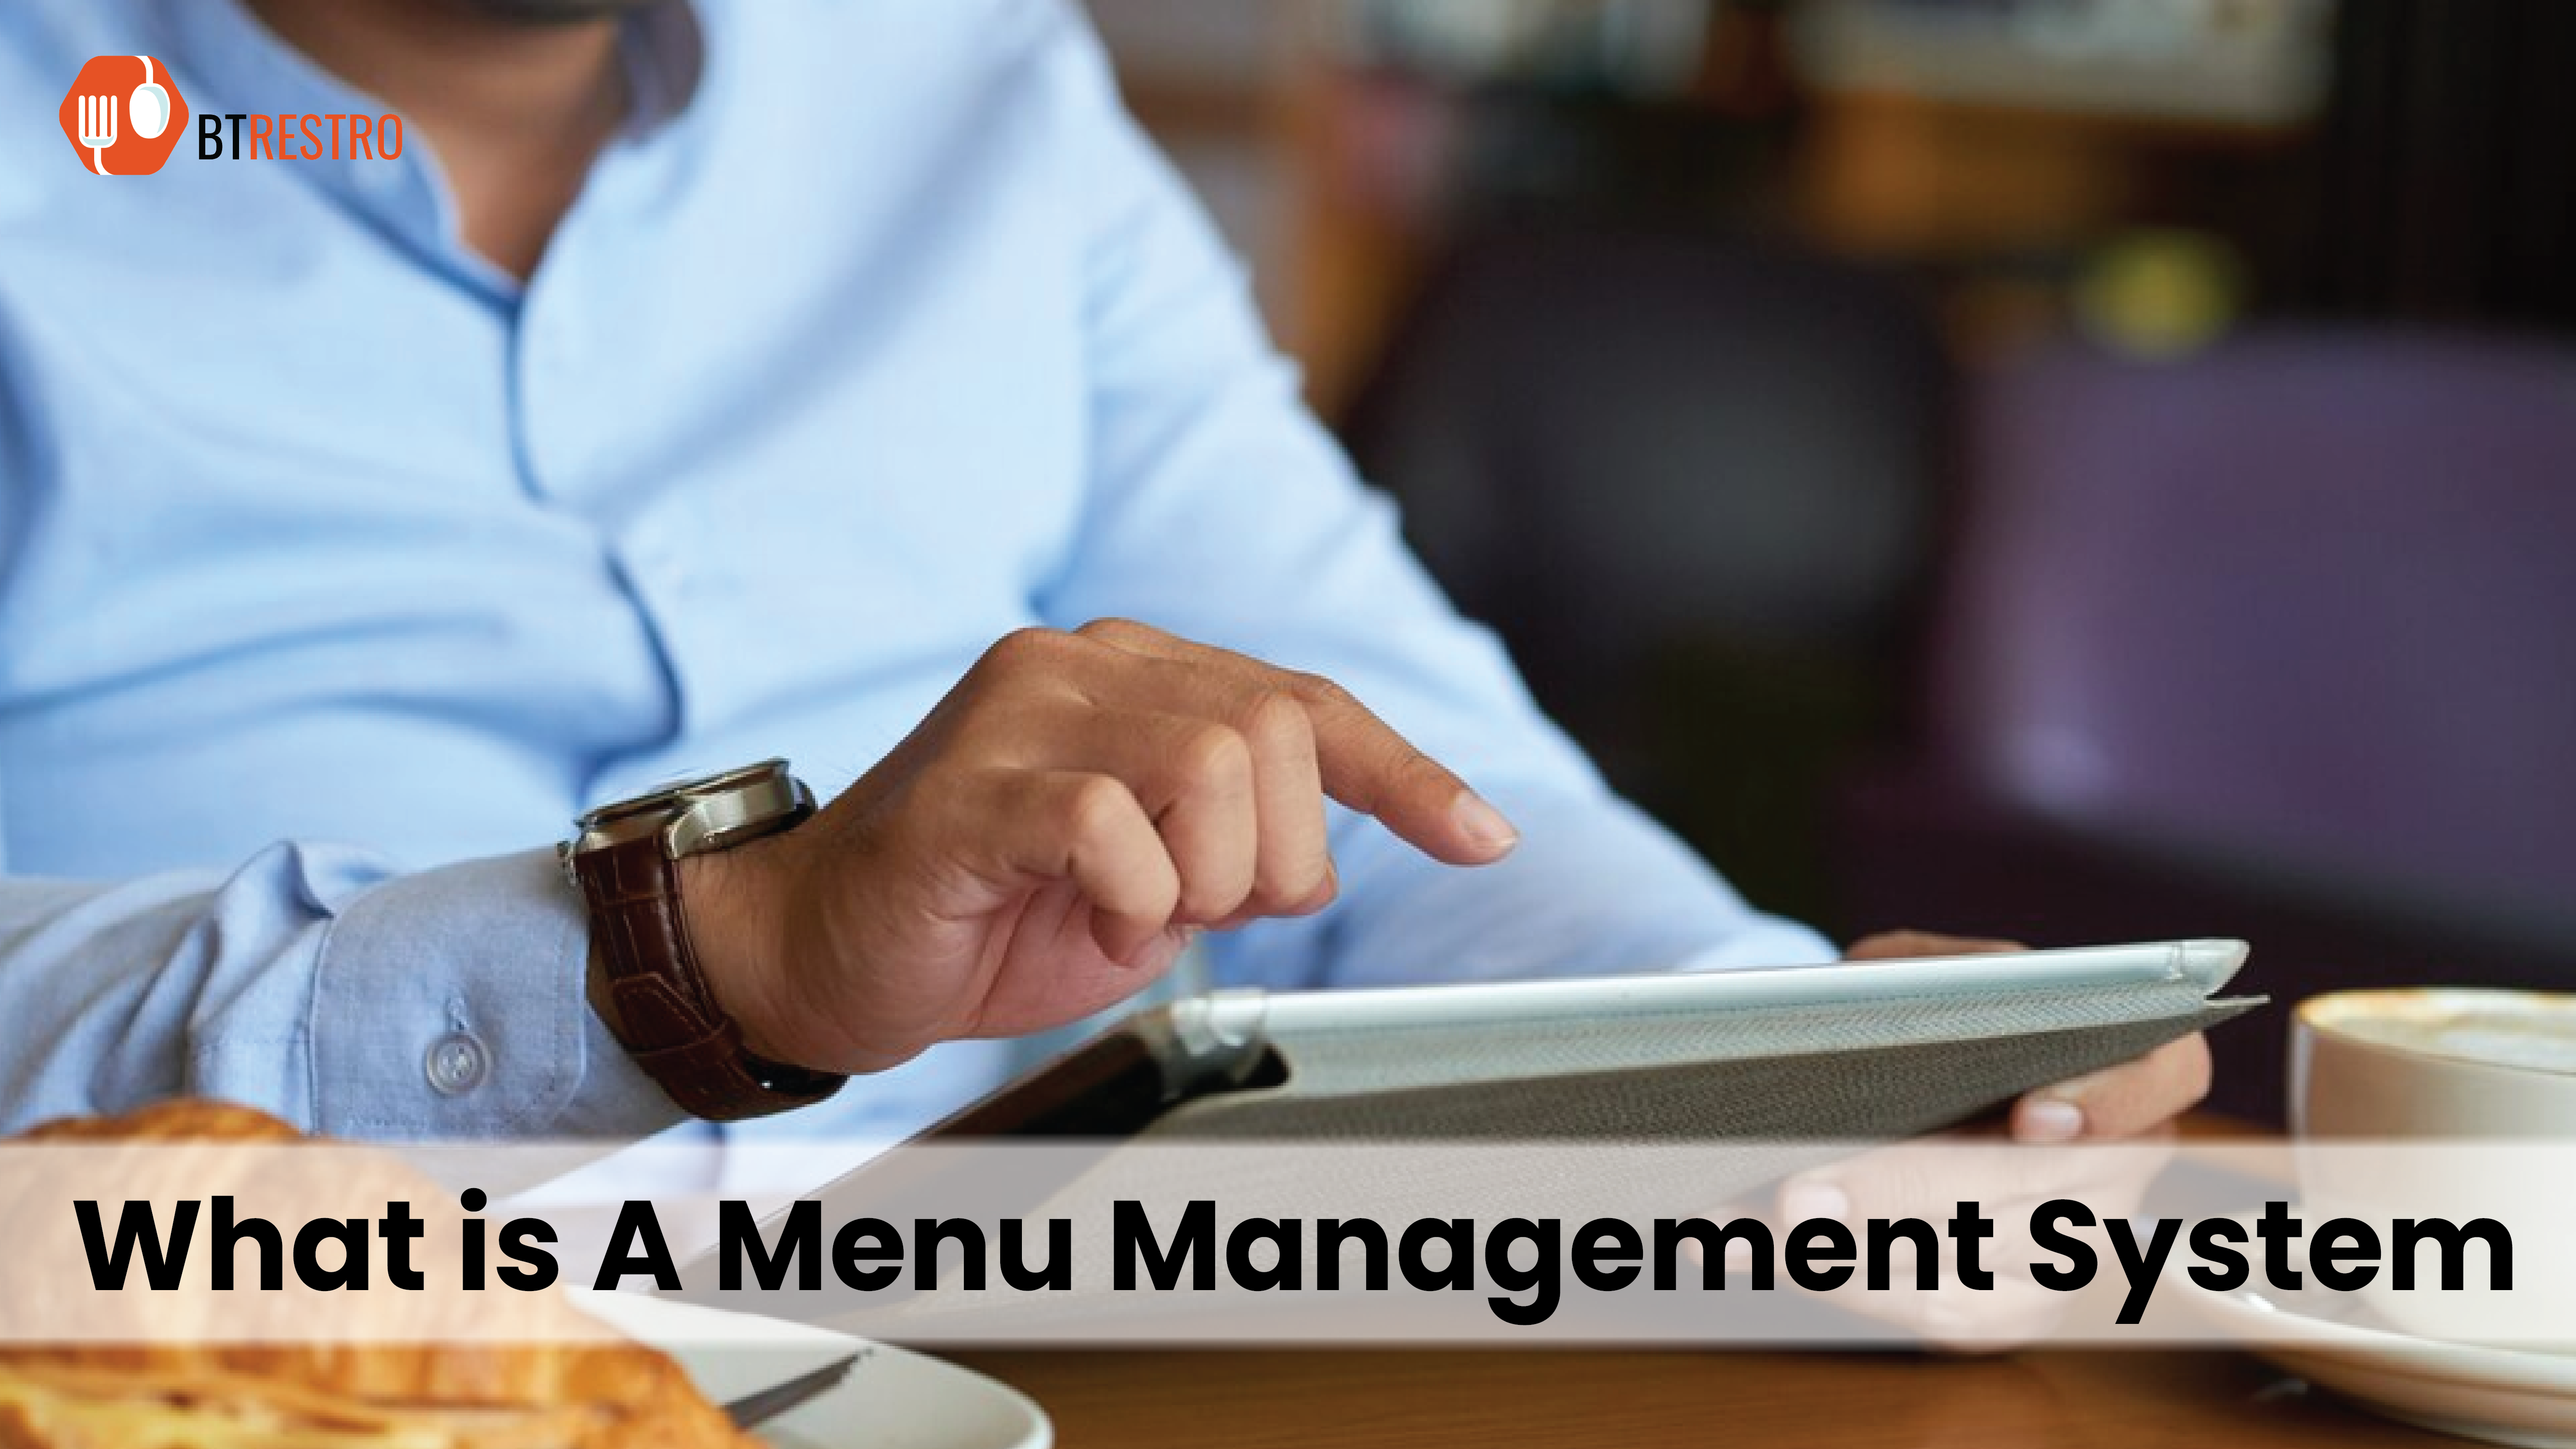 Benefits Of Using A Menu Management System